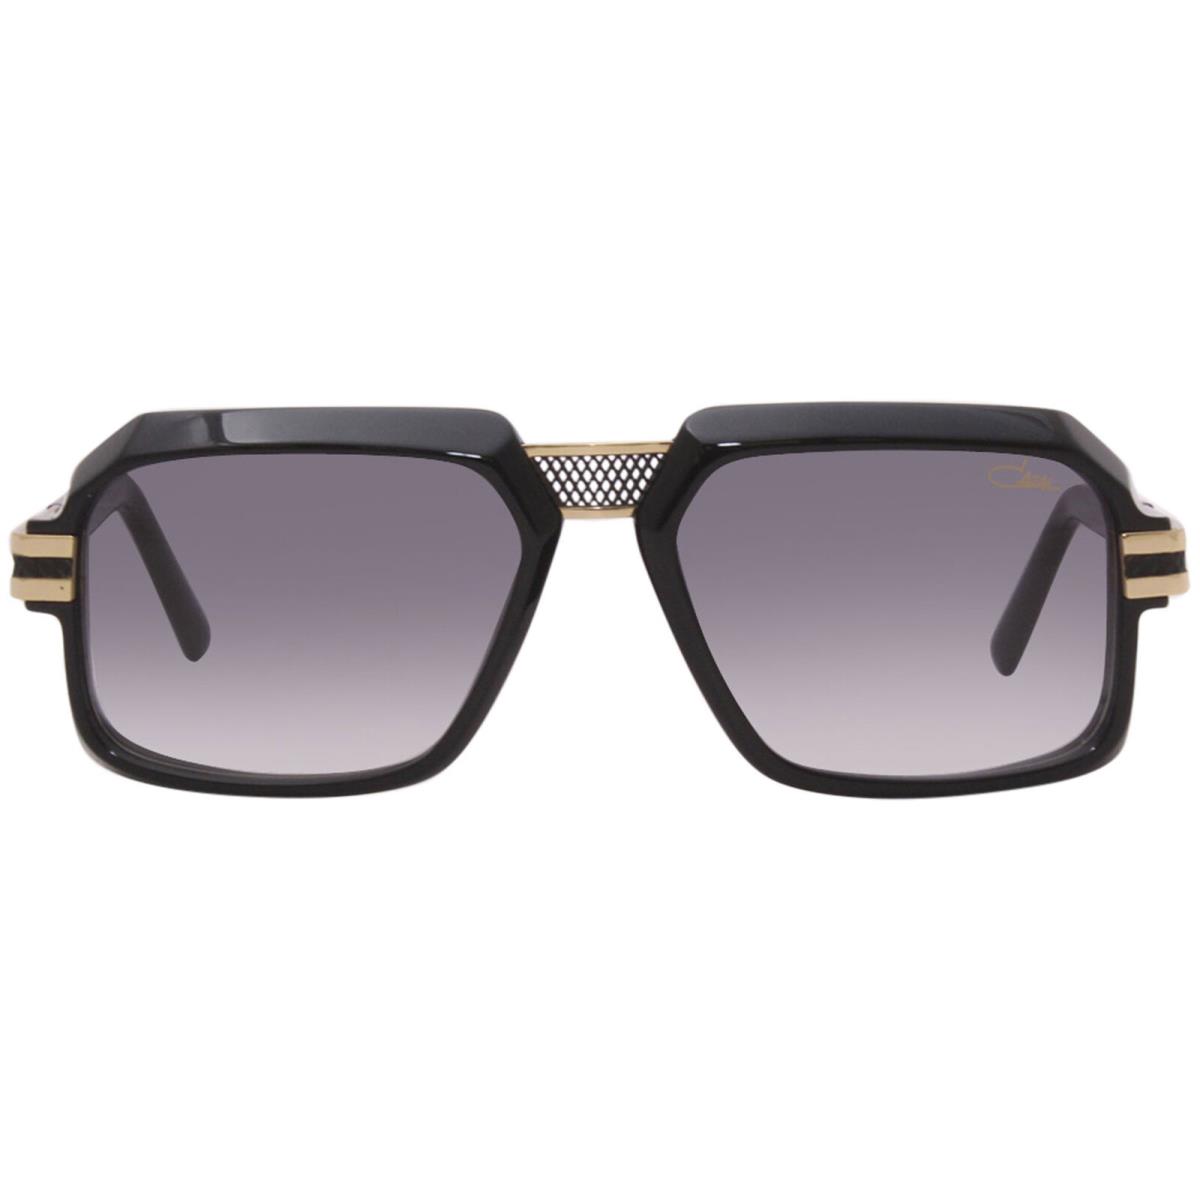 Cazal 8039 001 Sunglasses Men`s Black-gold/grey Gradient Lens Rectangular 56mm